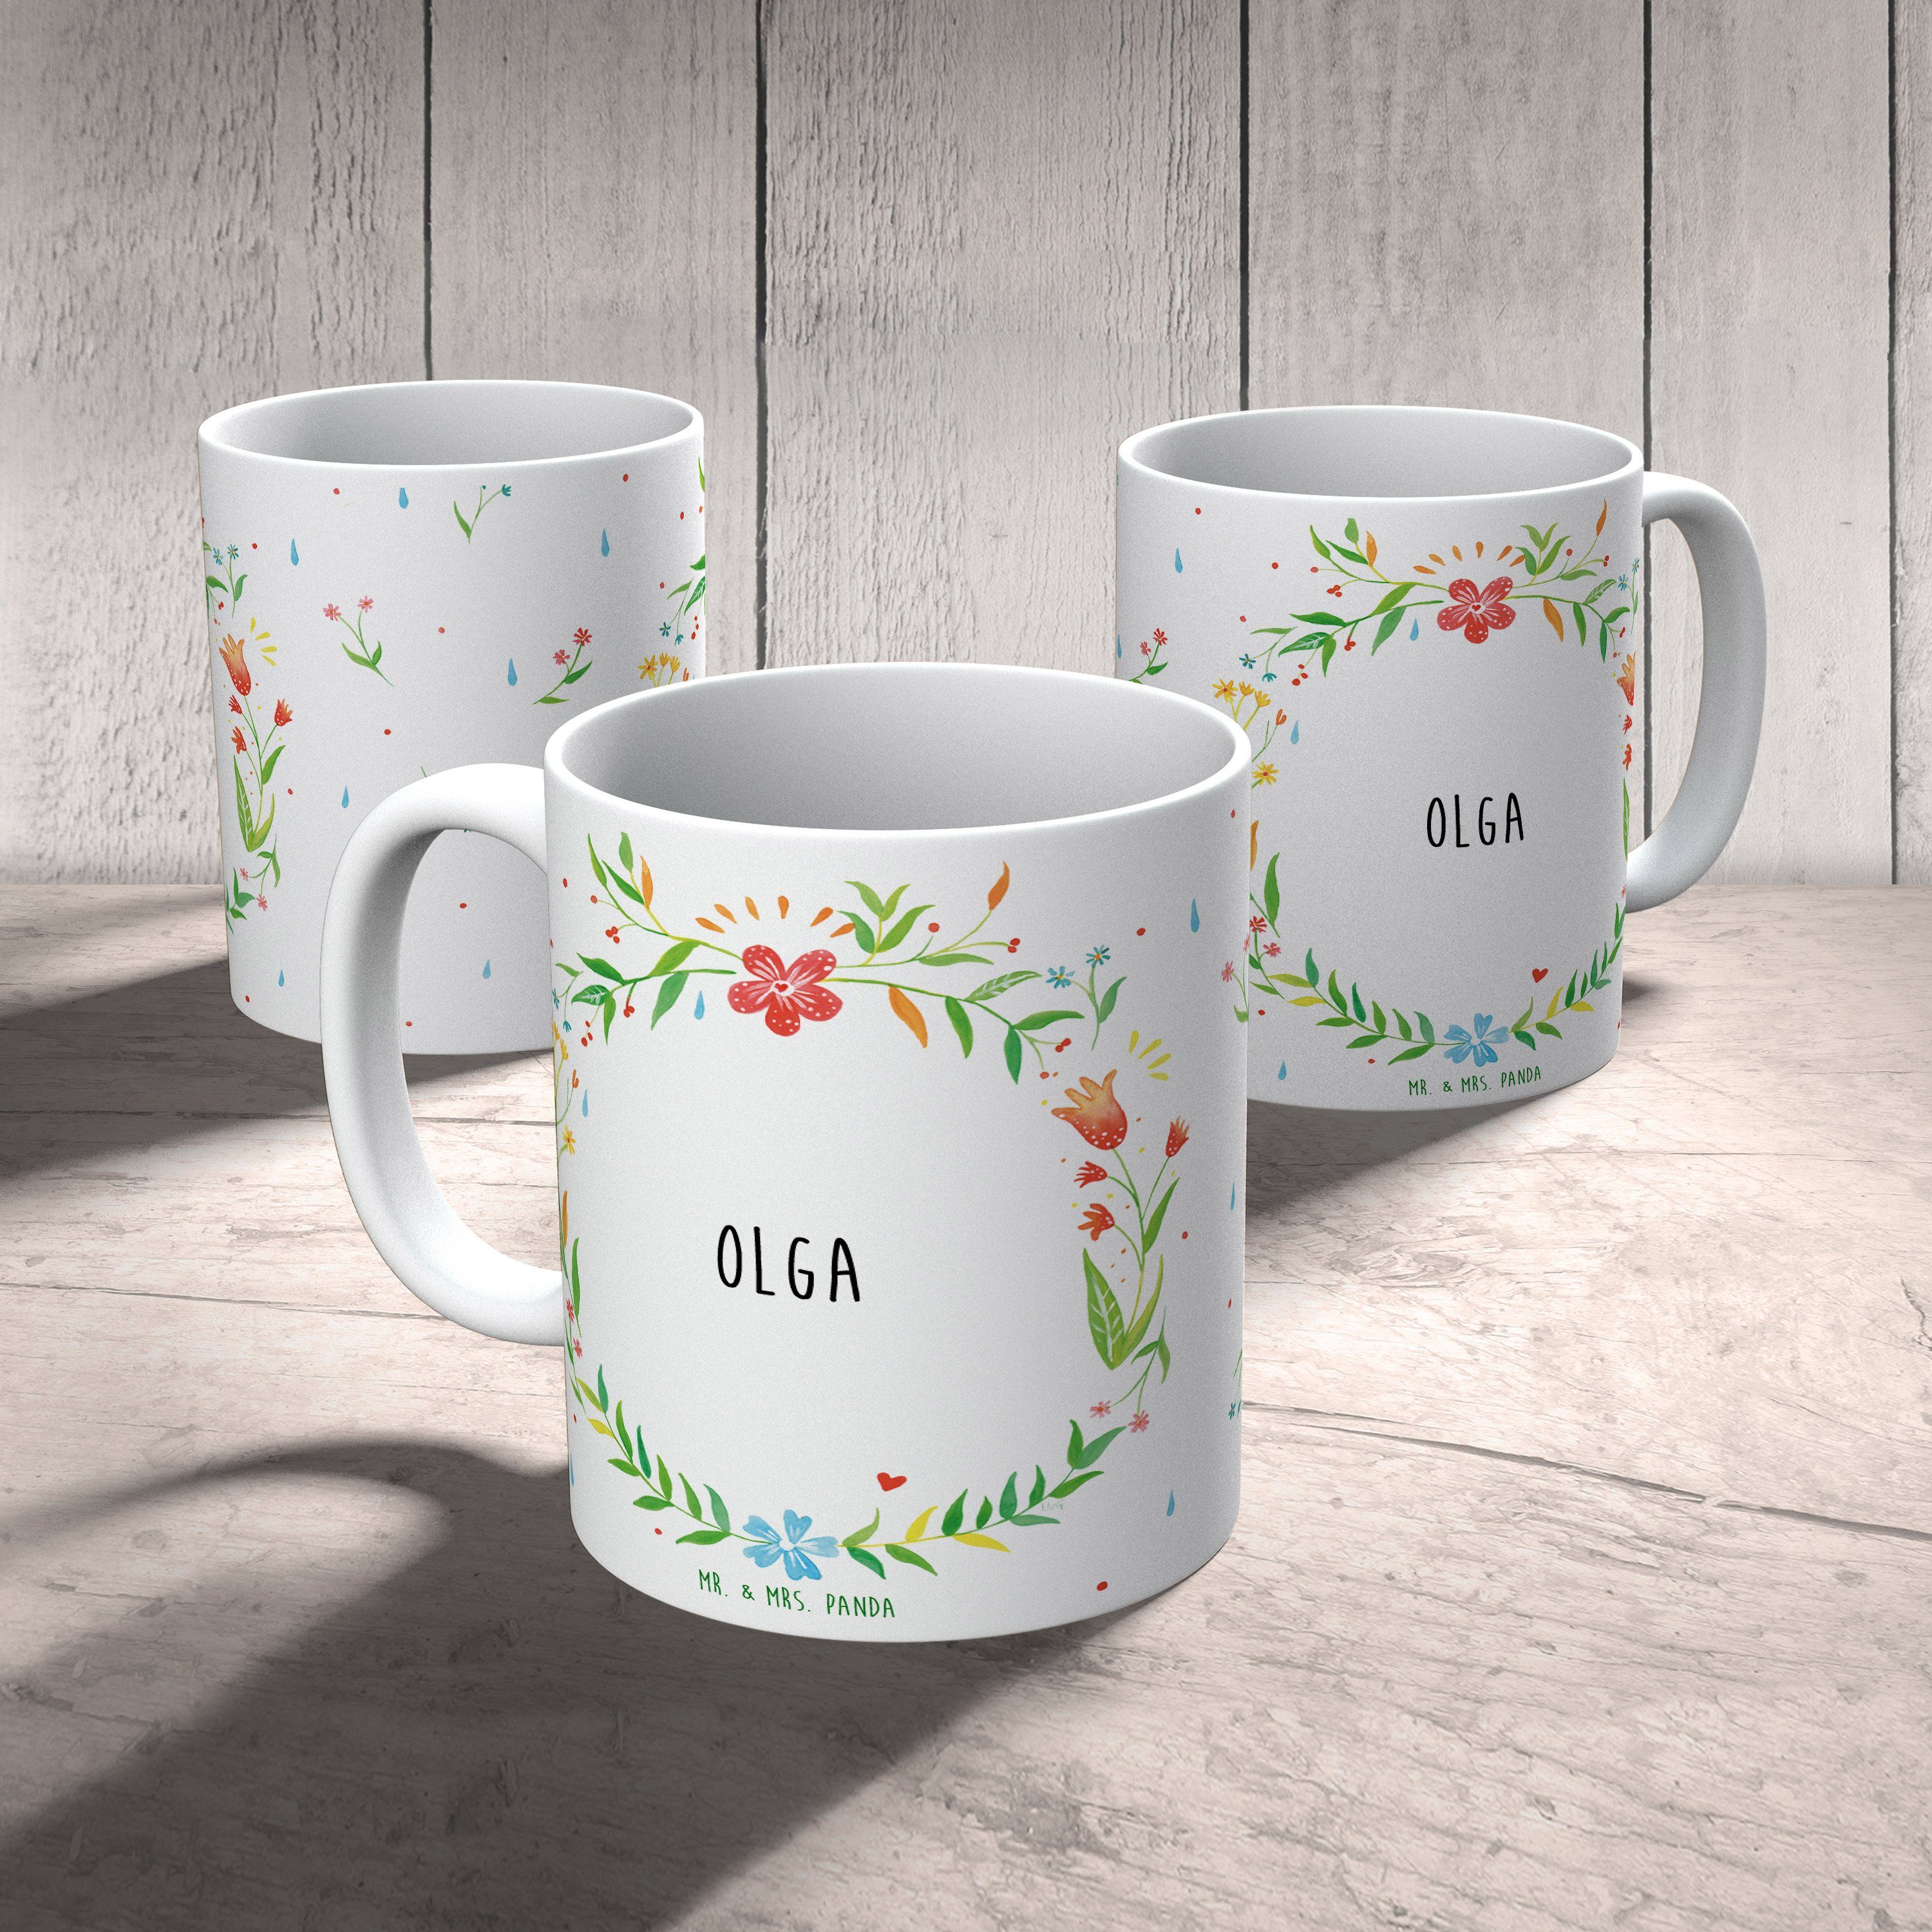 Mr. & Sprüche, Tasse Tasse Kaffeetasse, - Motive, Olga Mrs. Panda Tasse Teebecher, Keramik Geschenk